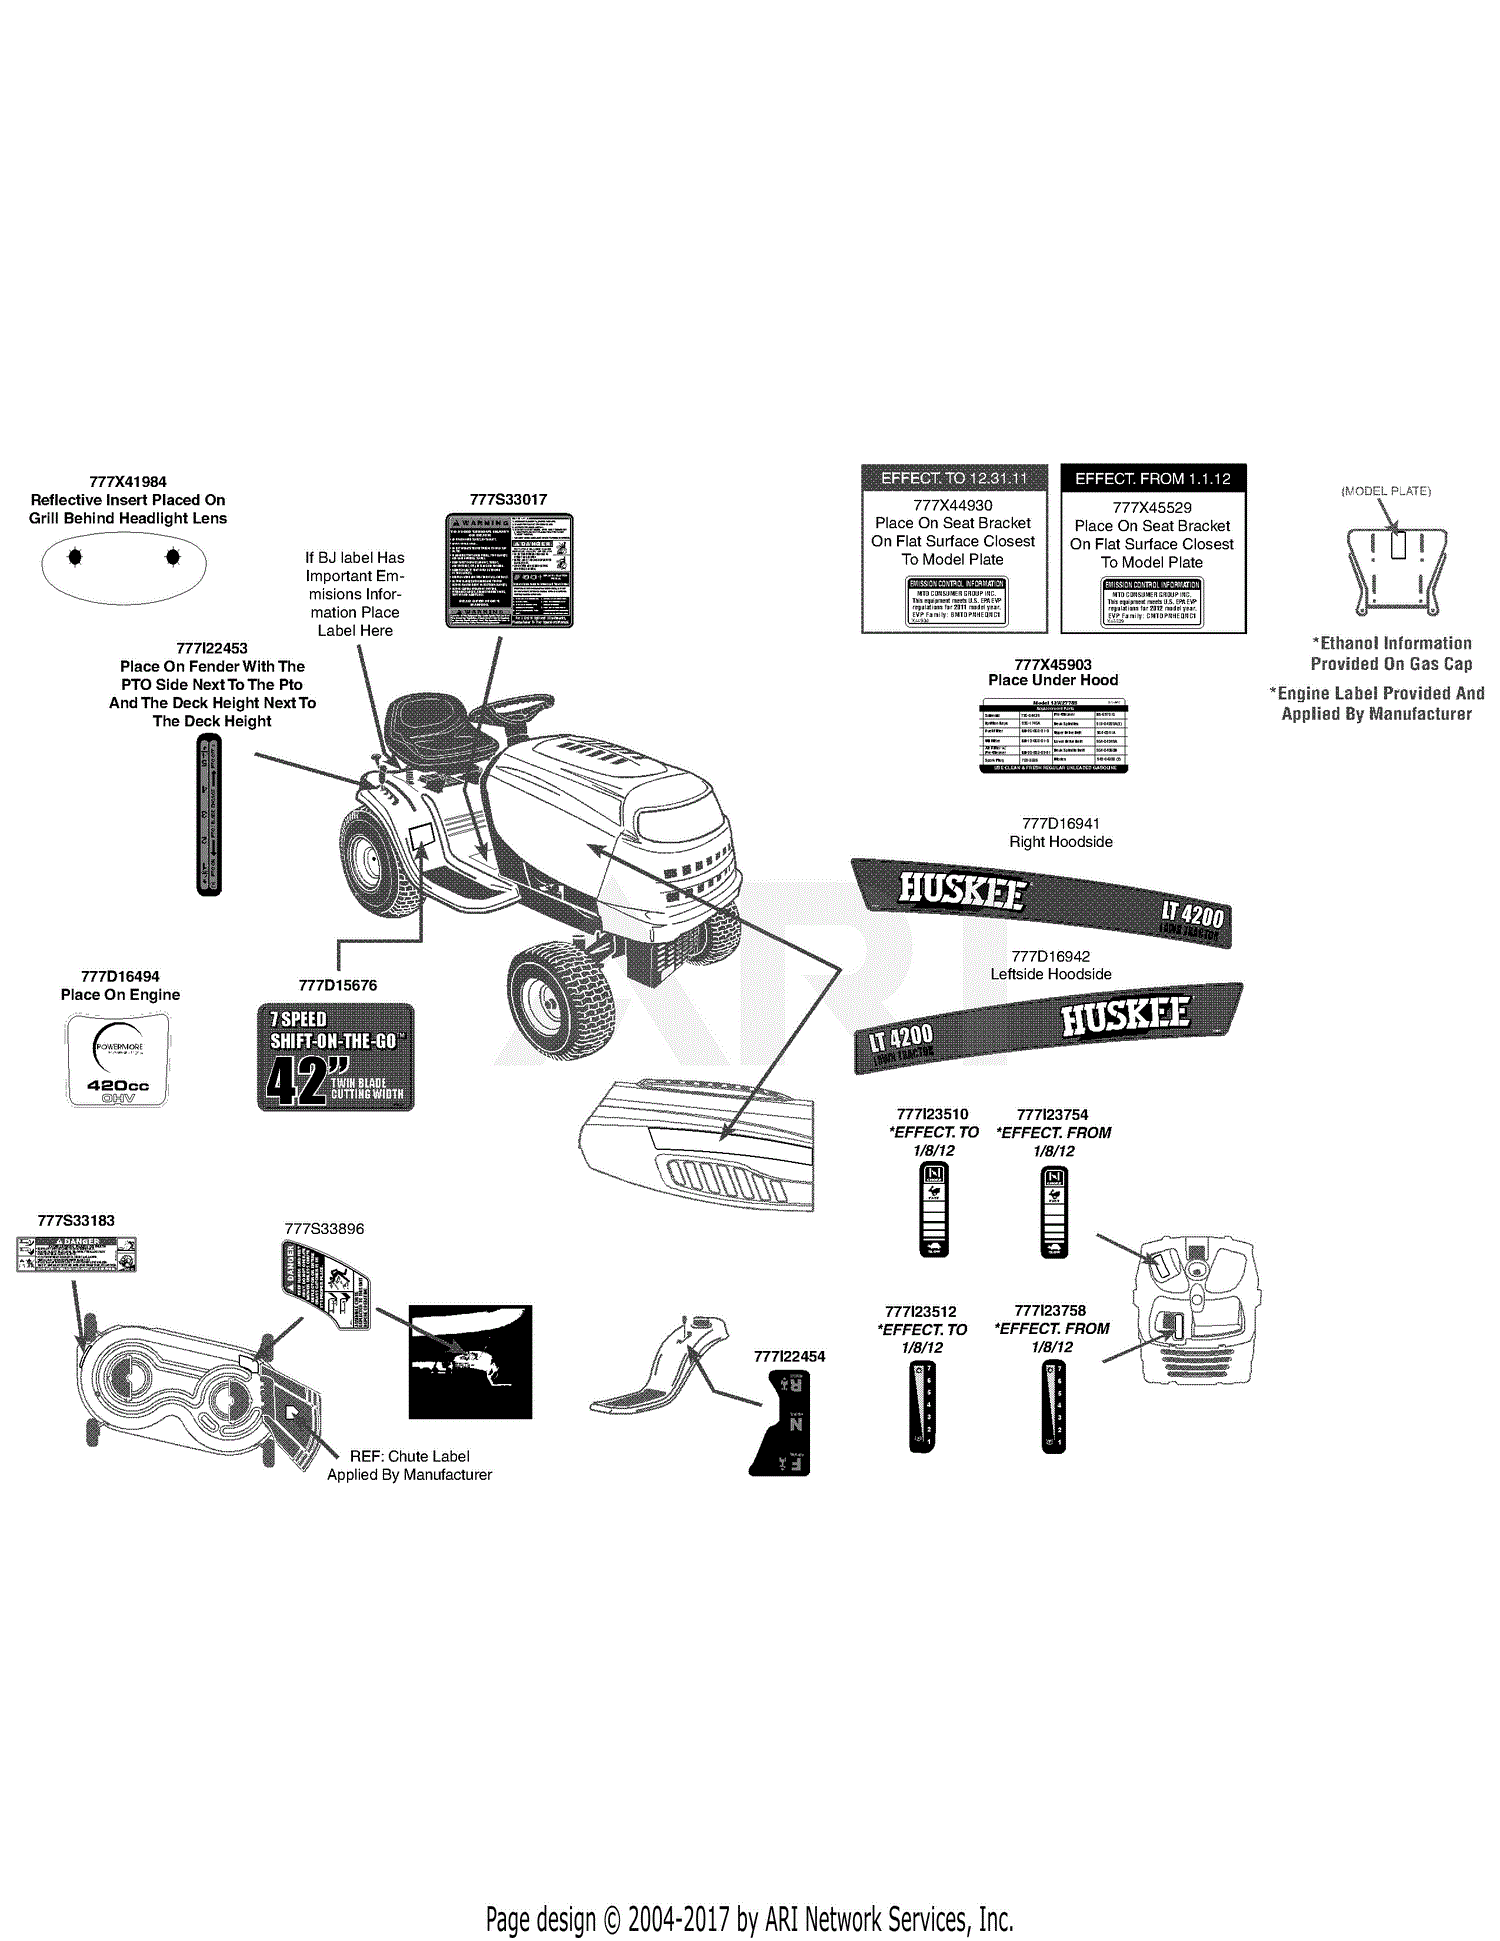 Huskee Supreme Slt 4600 Wiring Diagram huskee tractor wiring diagram 